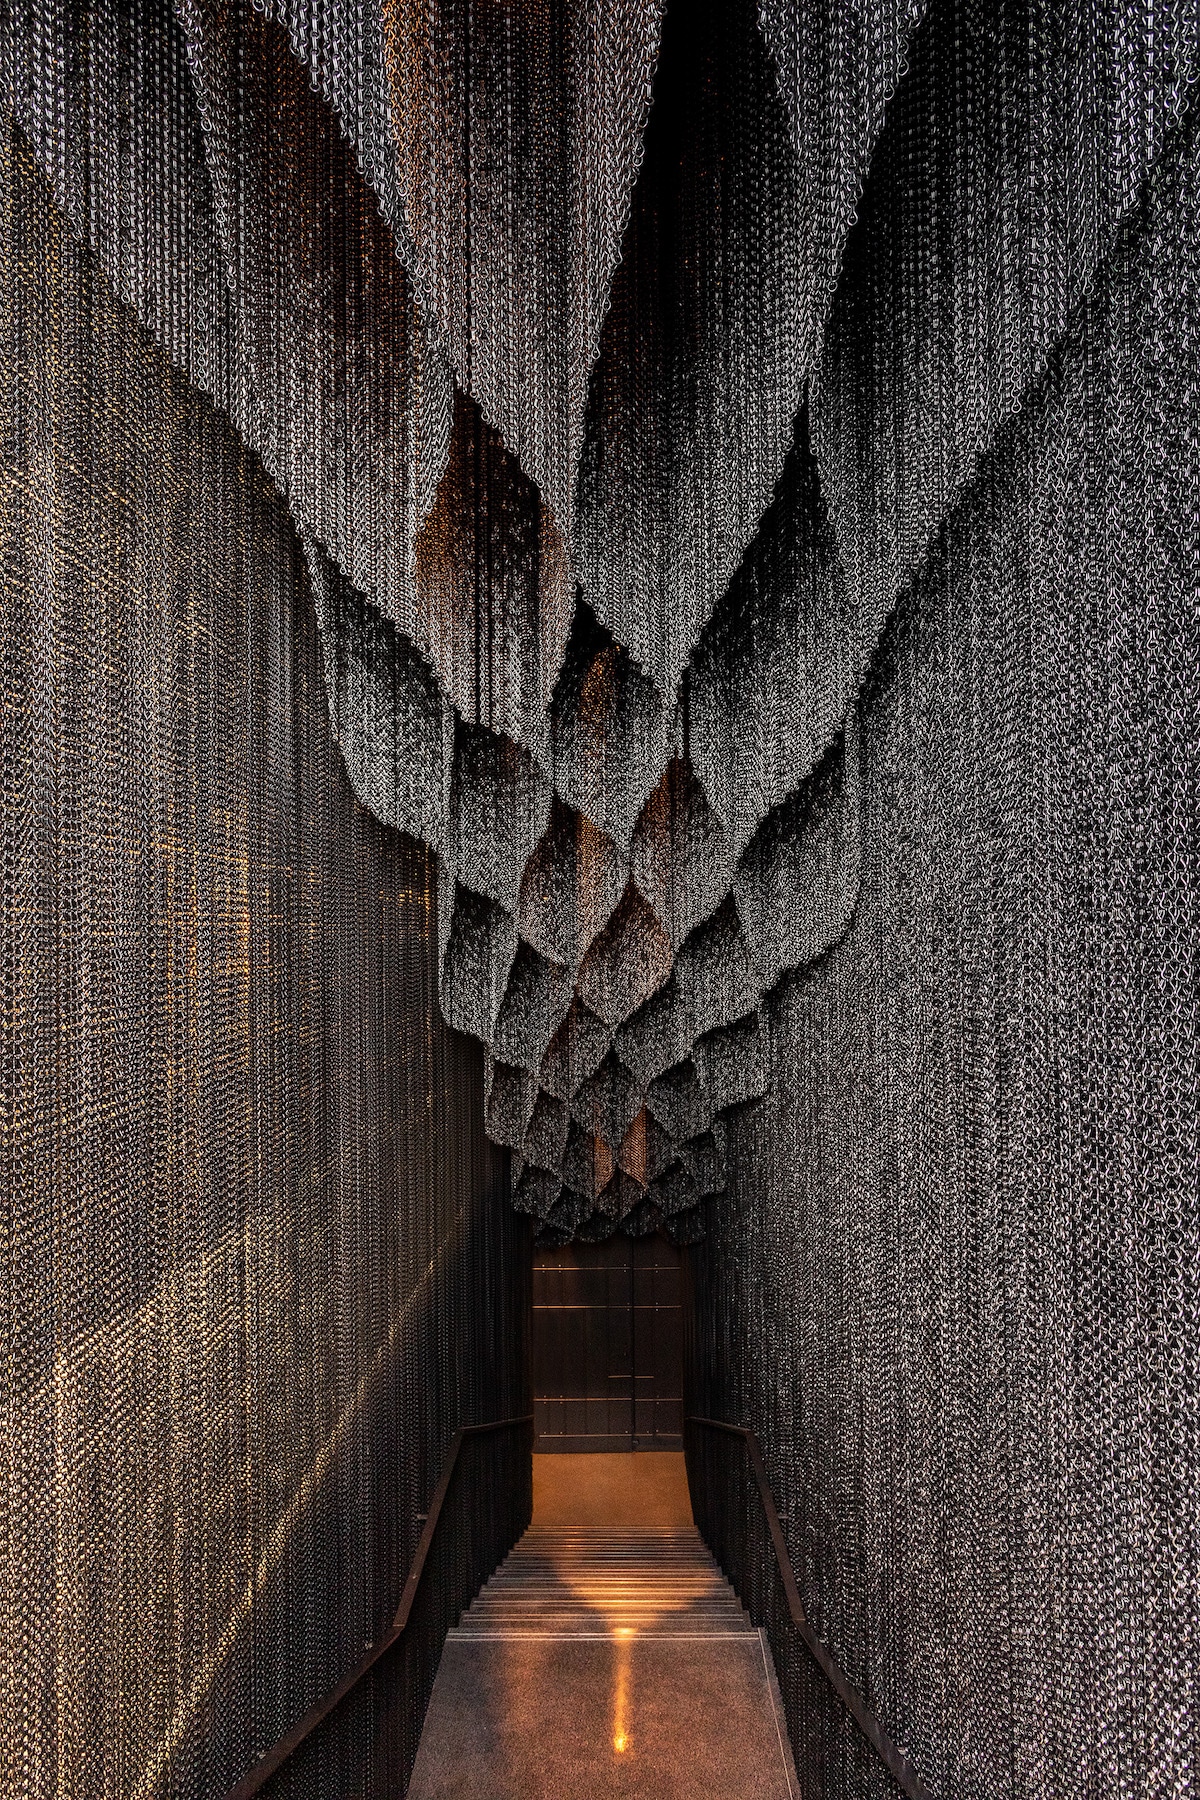 Interior de la escalera de cadenas diseñada pr Kengo Kuma para la Casa Batlló de antoni gaudi